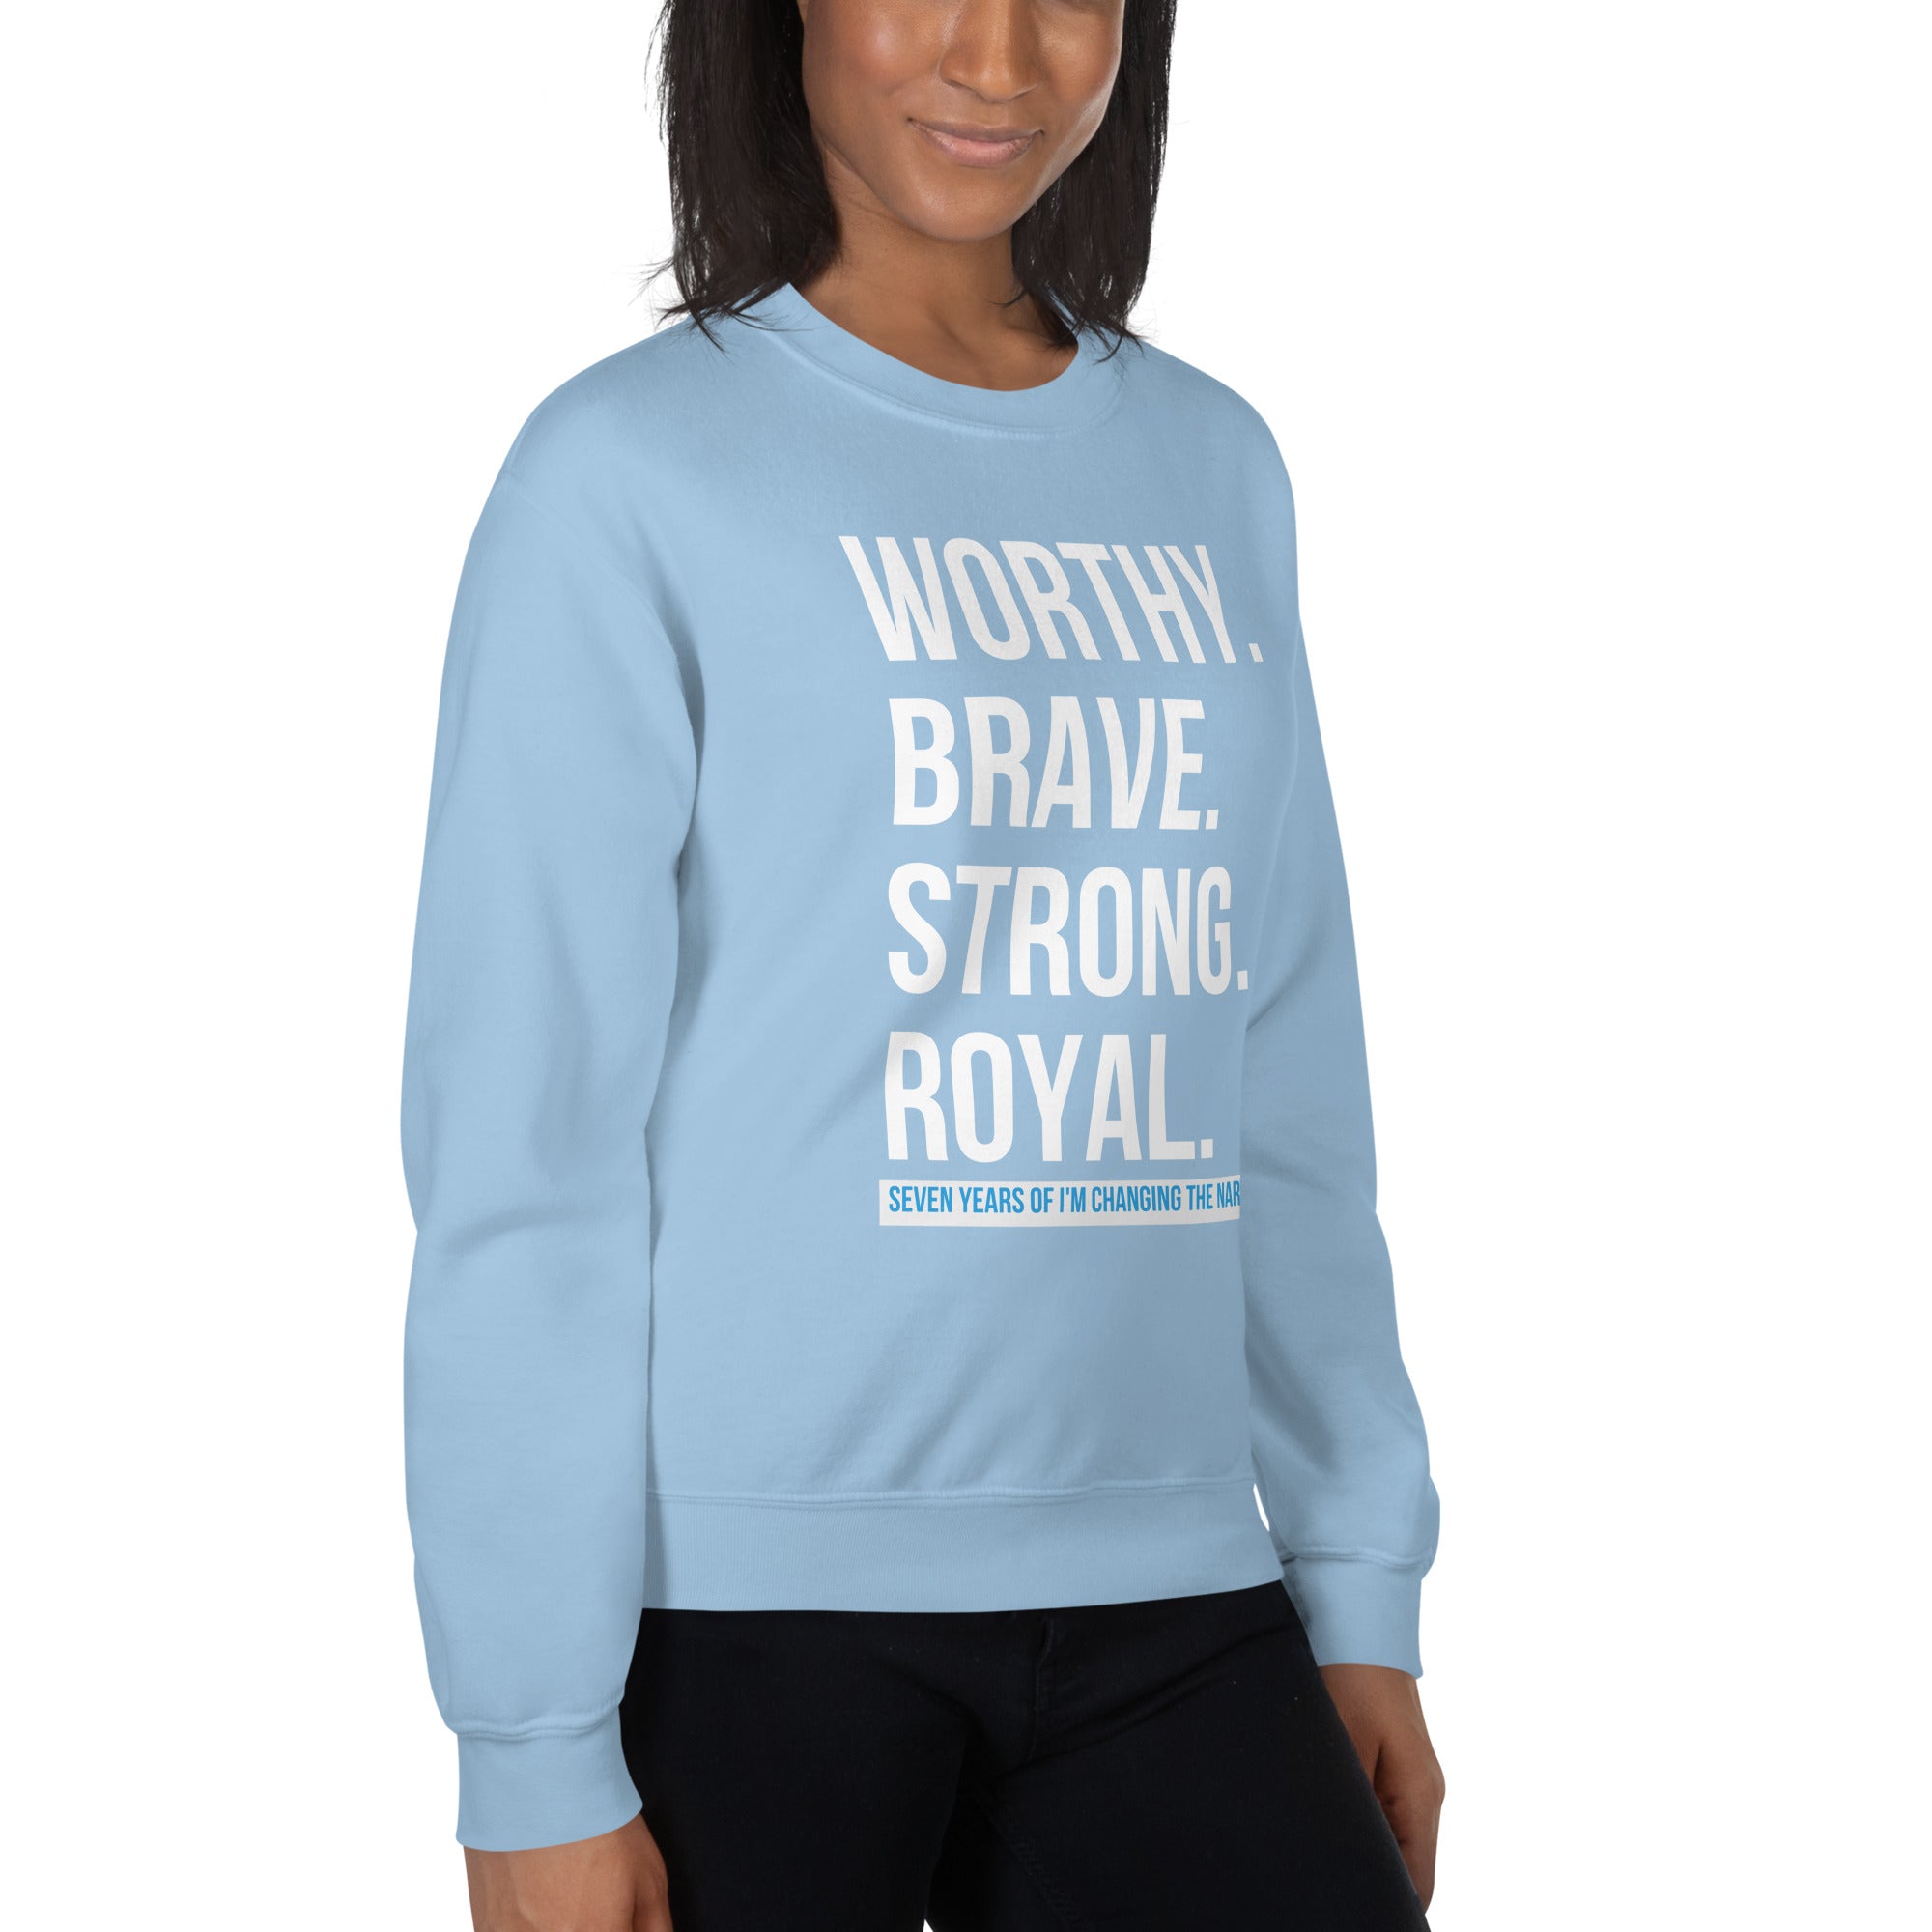 Worthy, Brave, Strong, Royal - ICTN Sweatshirt